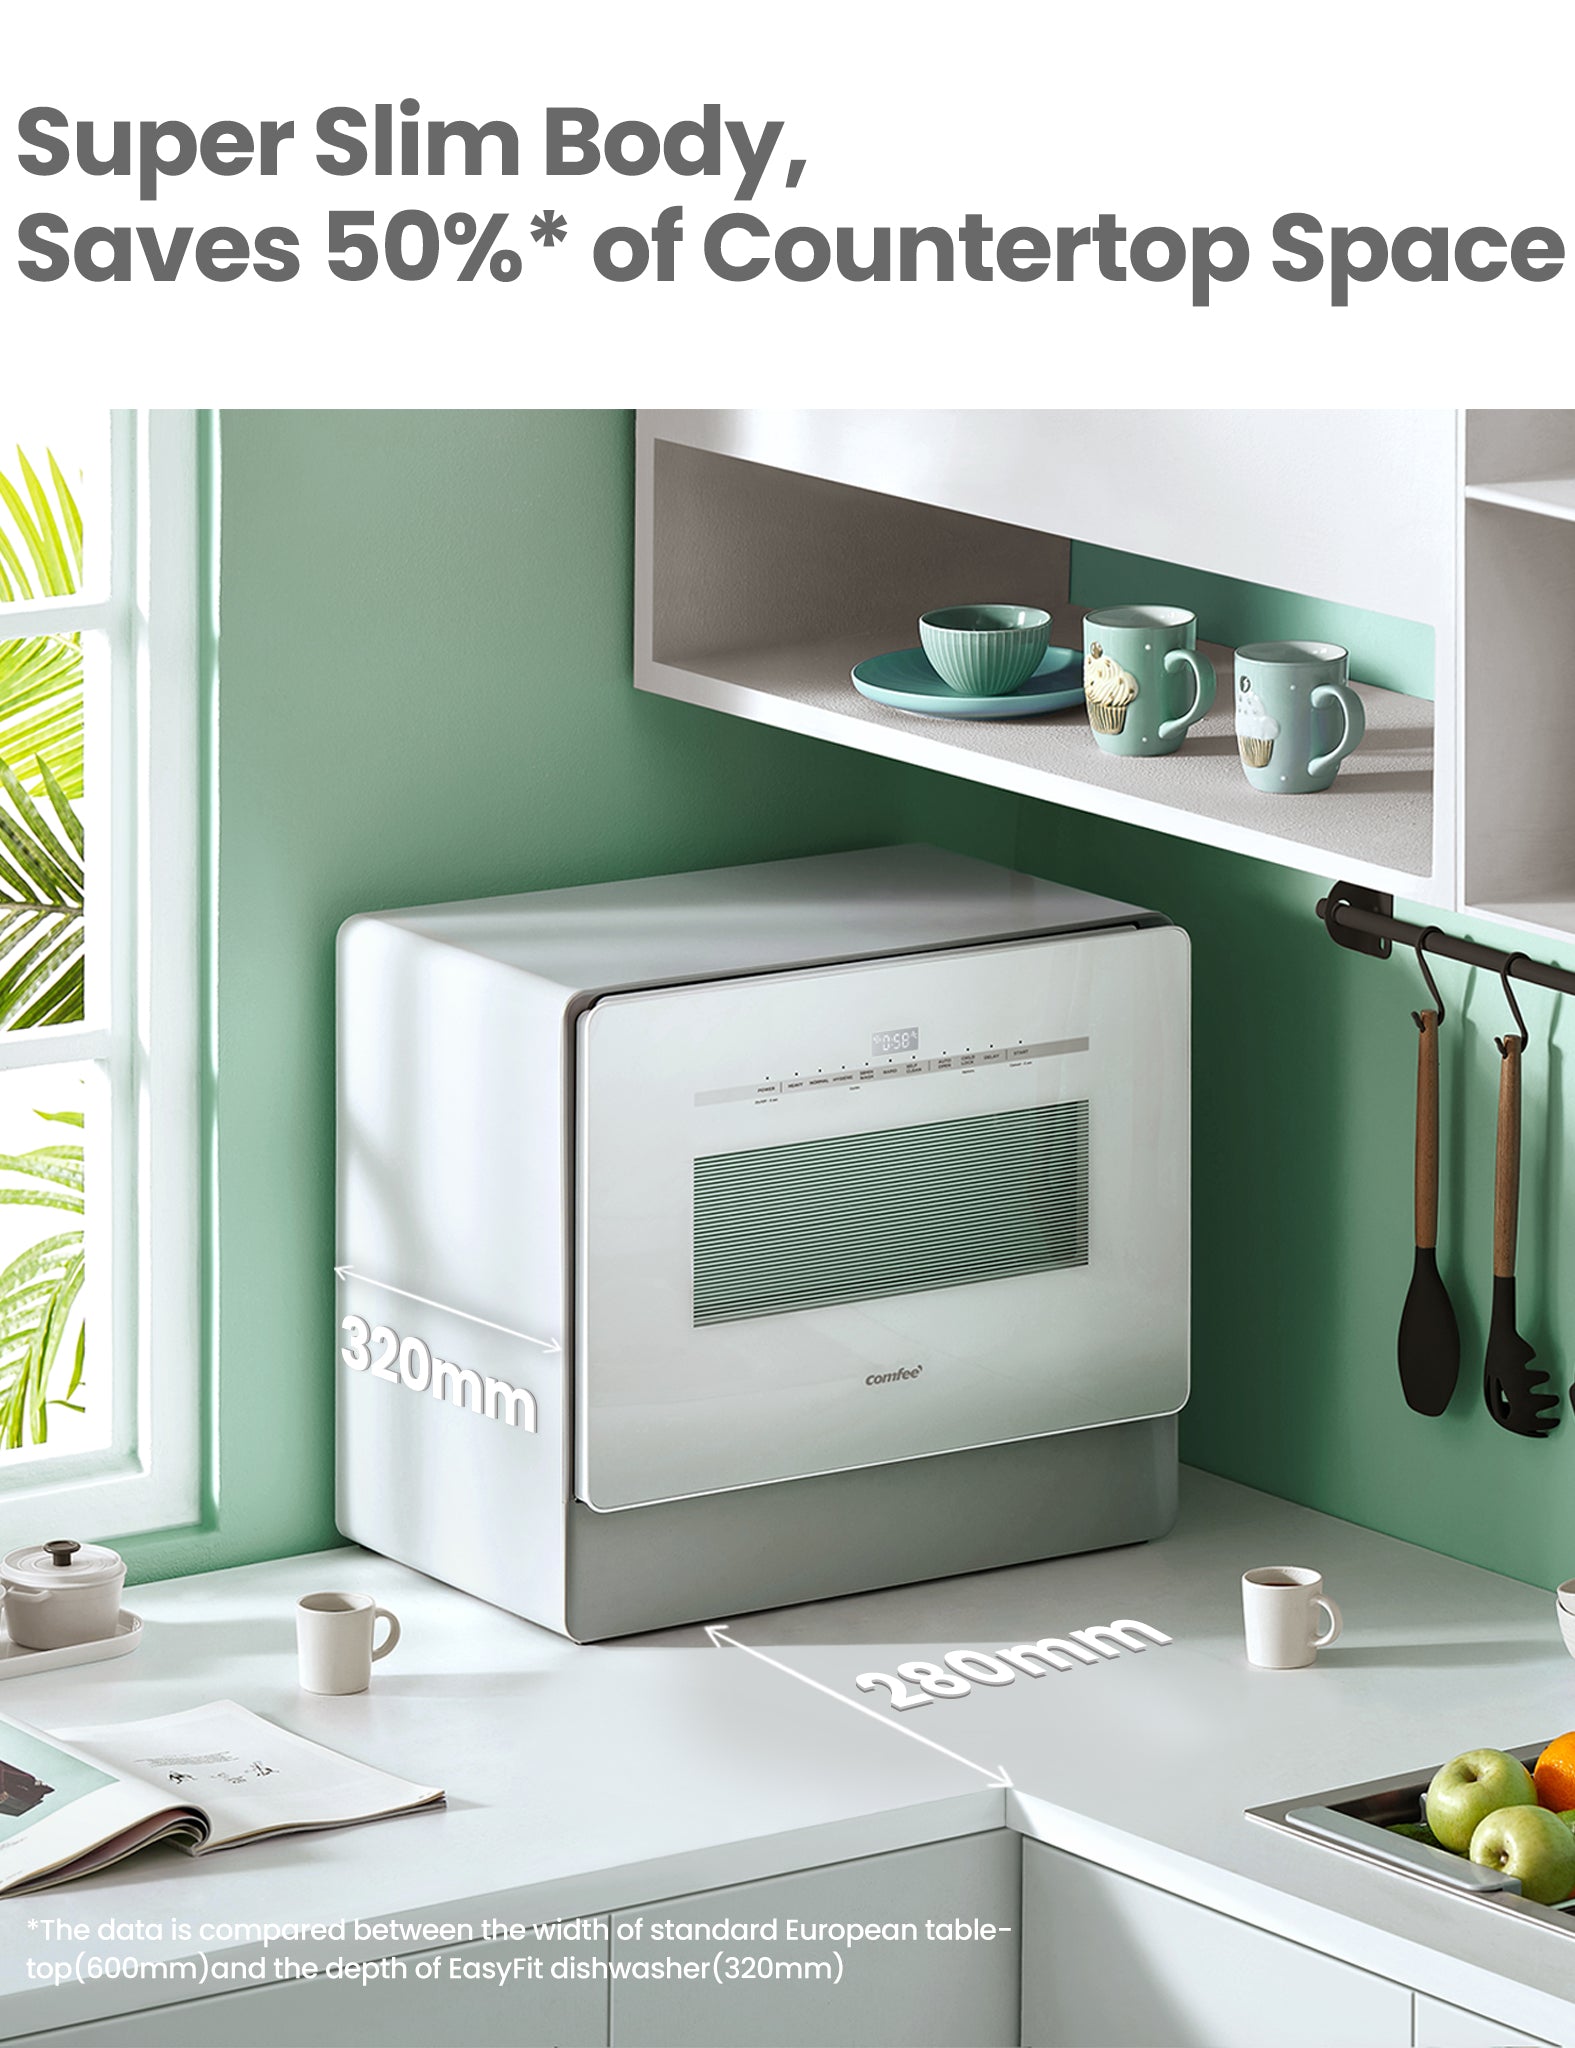 Comfee' Portable Dishwasher Countertop, Mini Dishwasher With 5l